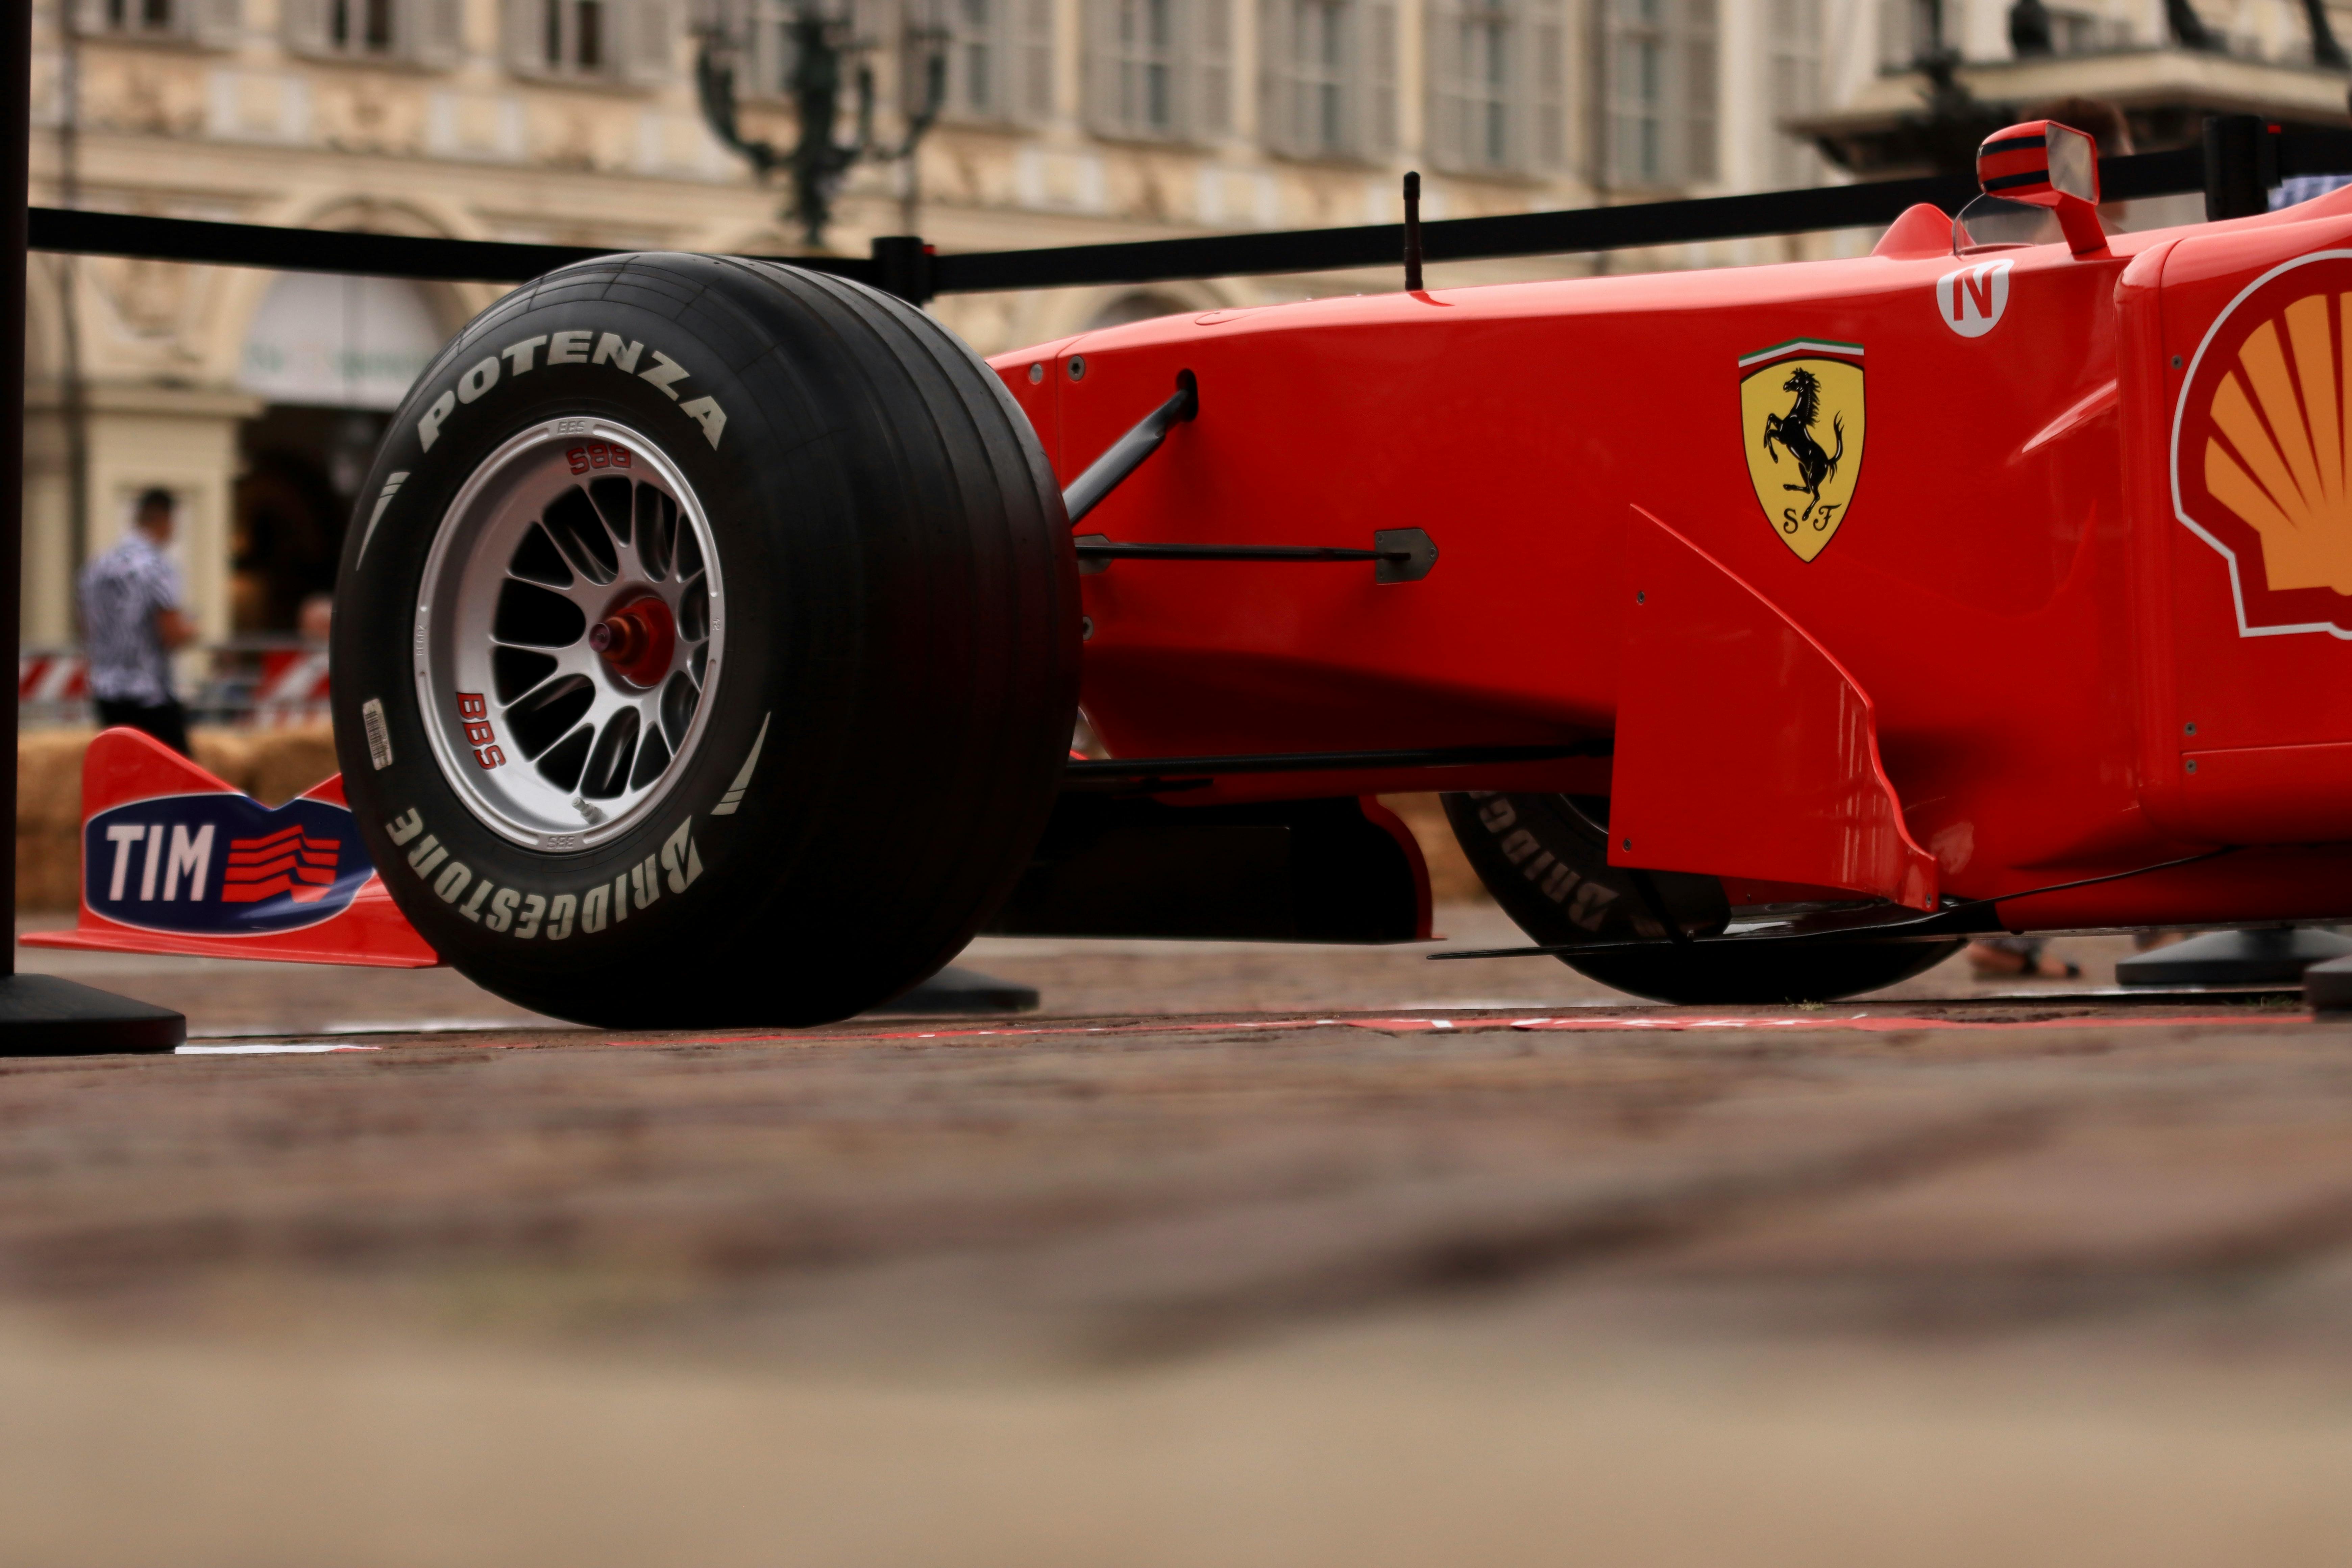 Formula 1 Car Photos, Download The BEST Free Formula 1 Car Stock Photos and HD Images